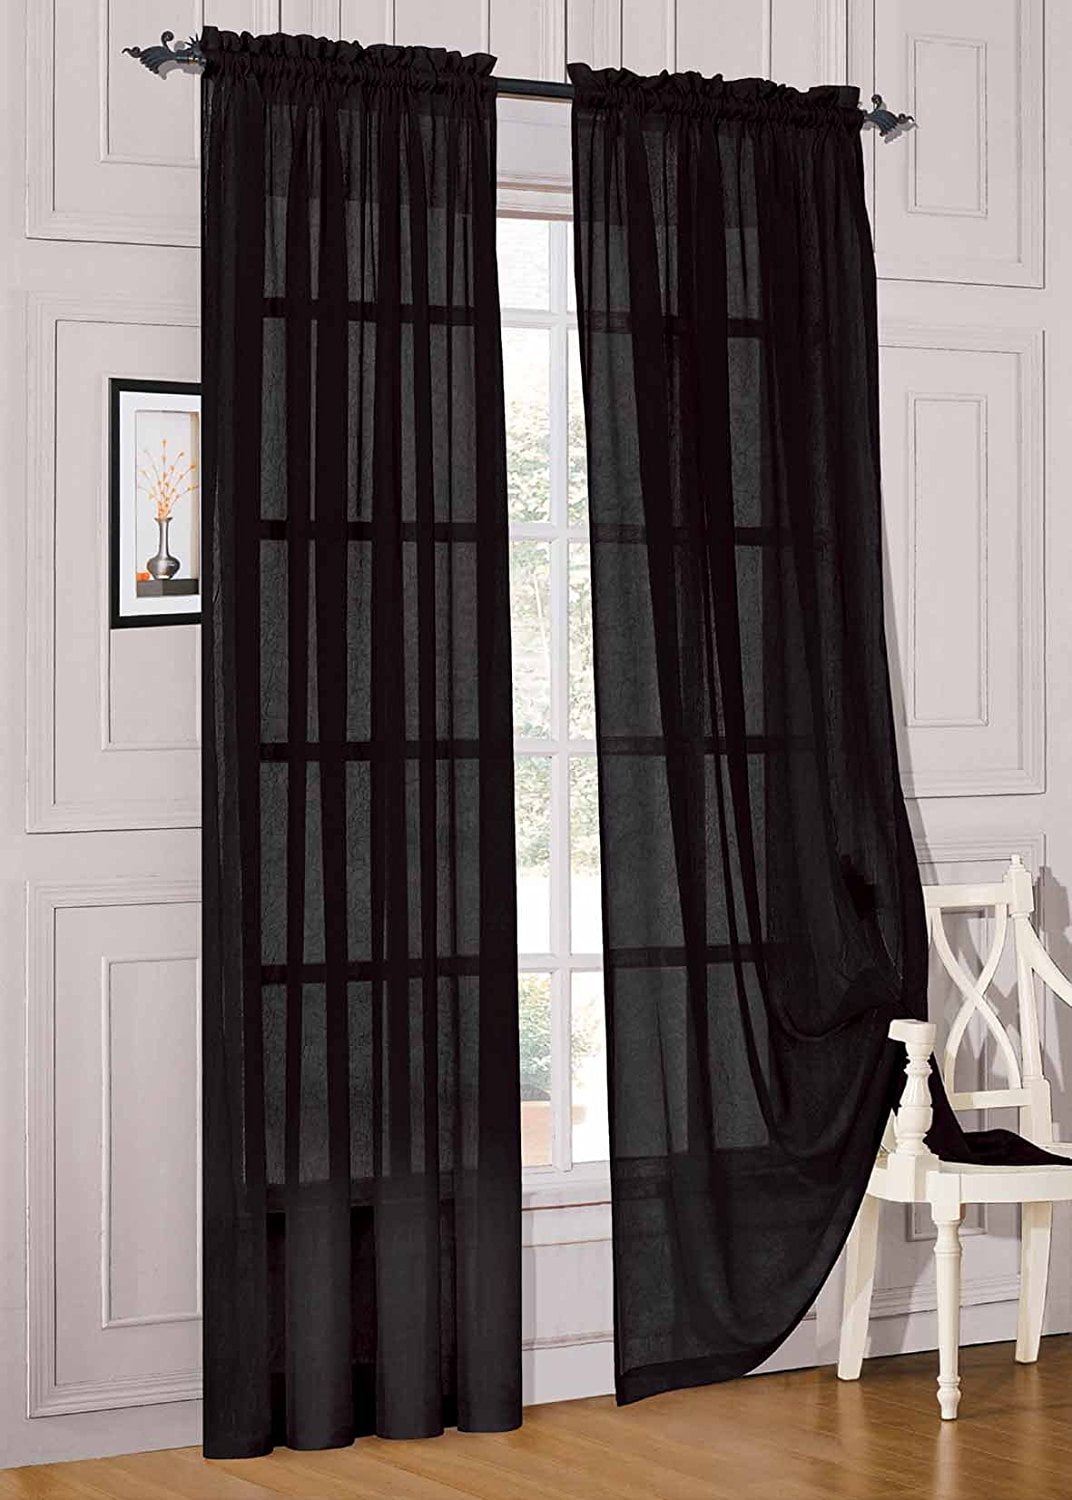 60" x 63" 2 Gold Elegant Window Panels Treatments Sheers Curtains Drapes